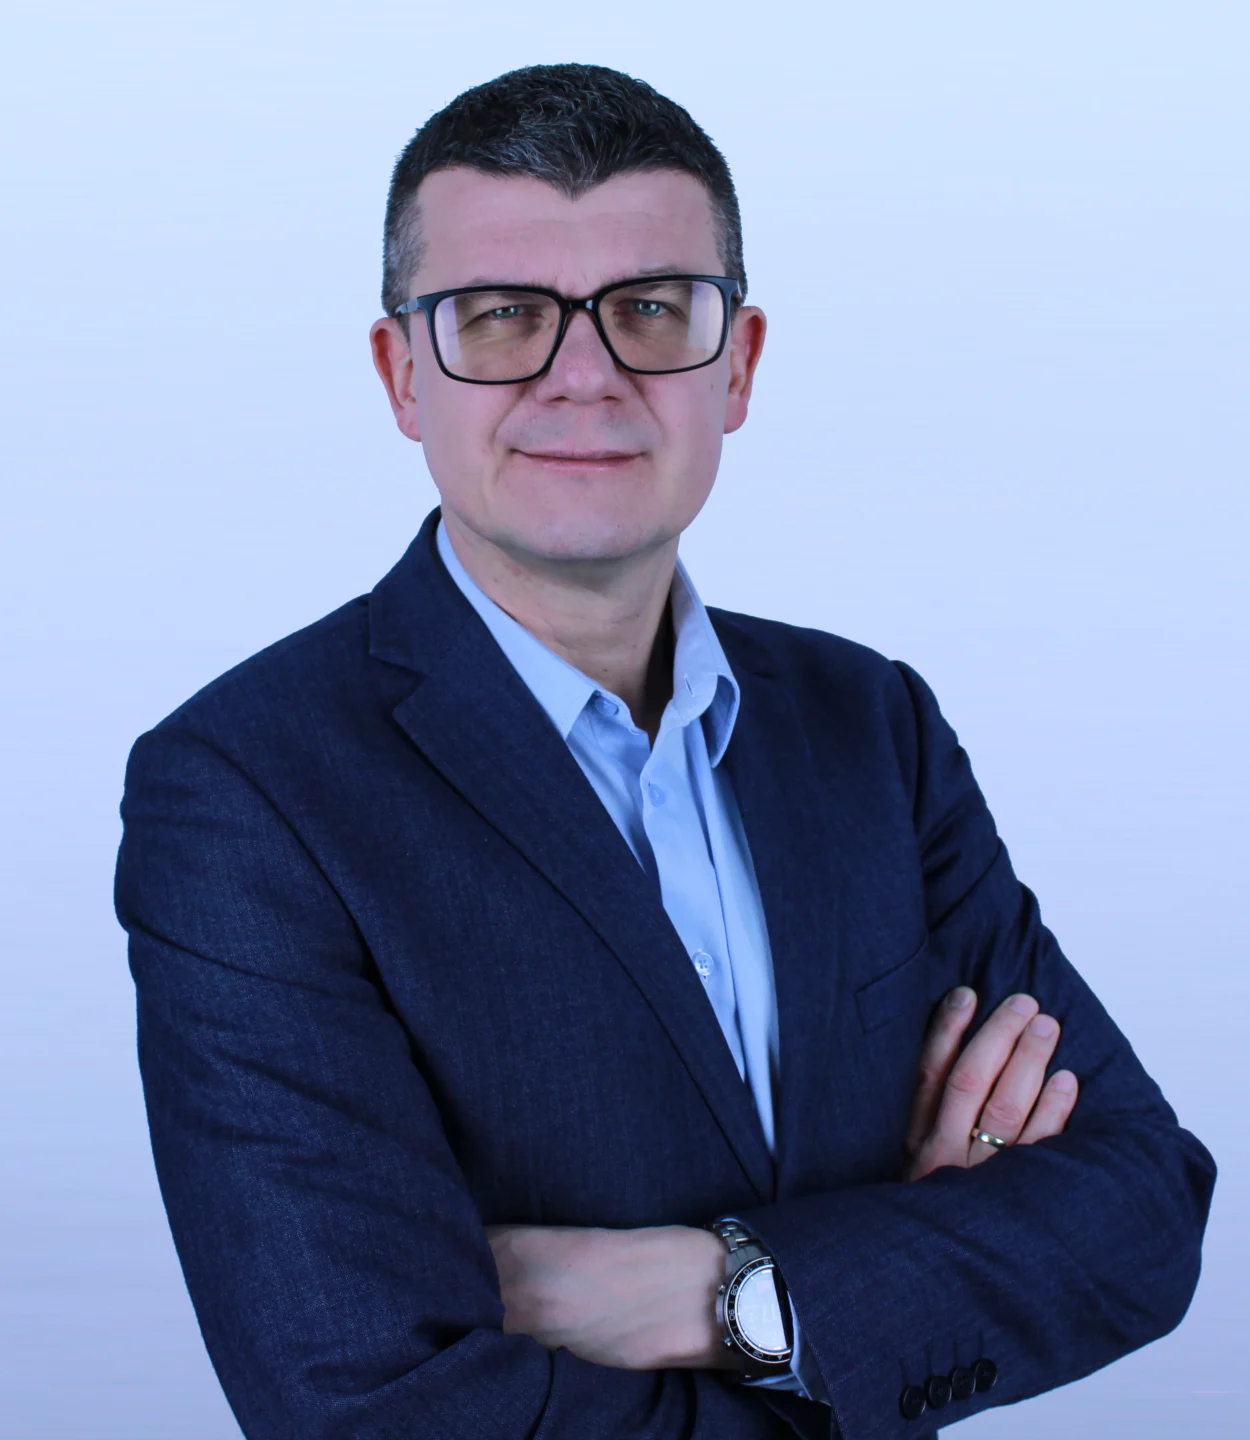 Tomasz Mróz - Founding Partner